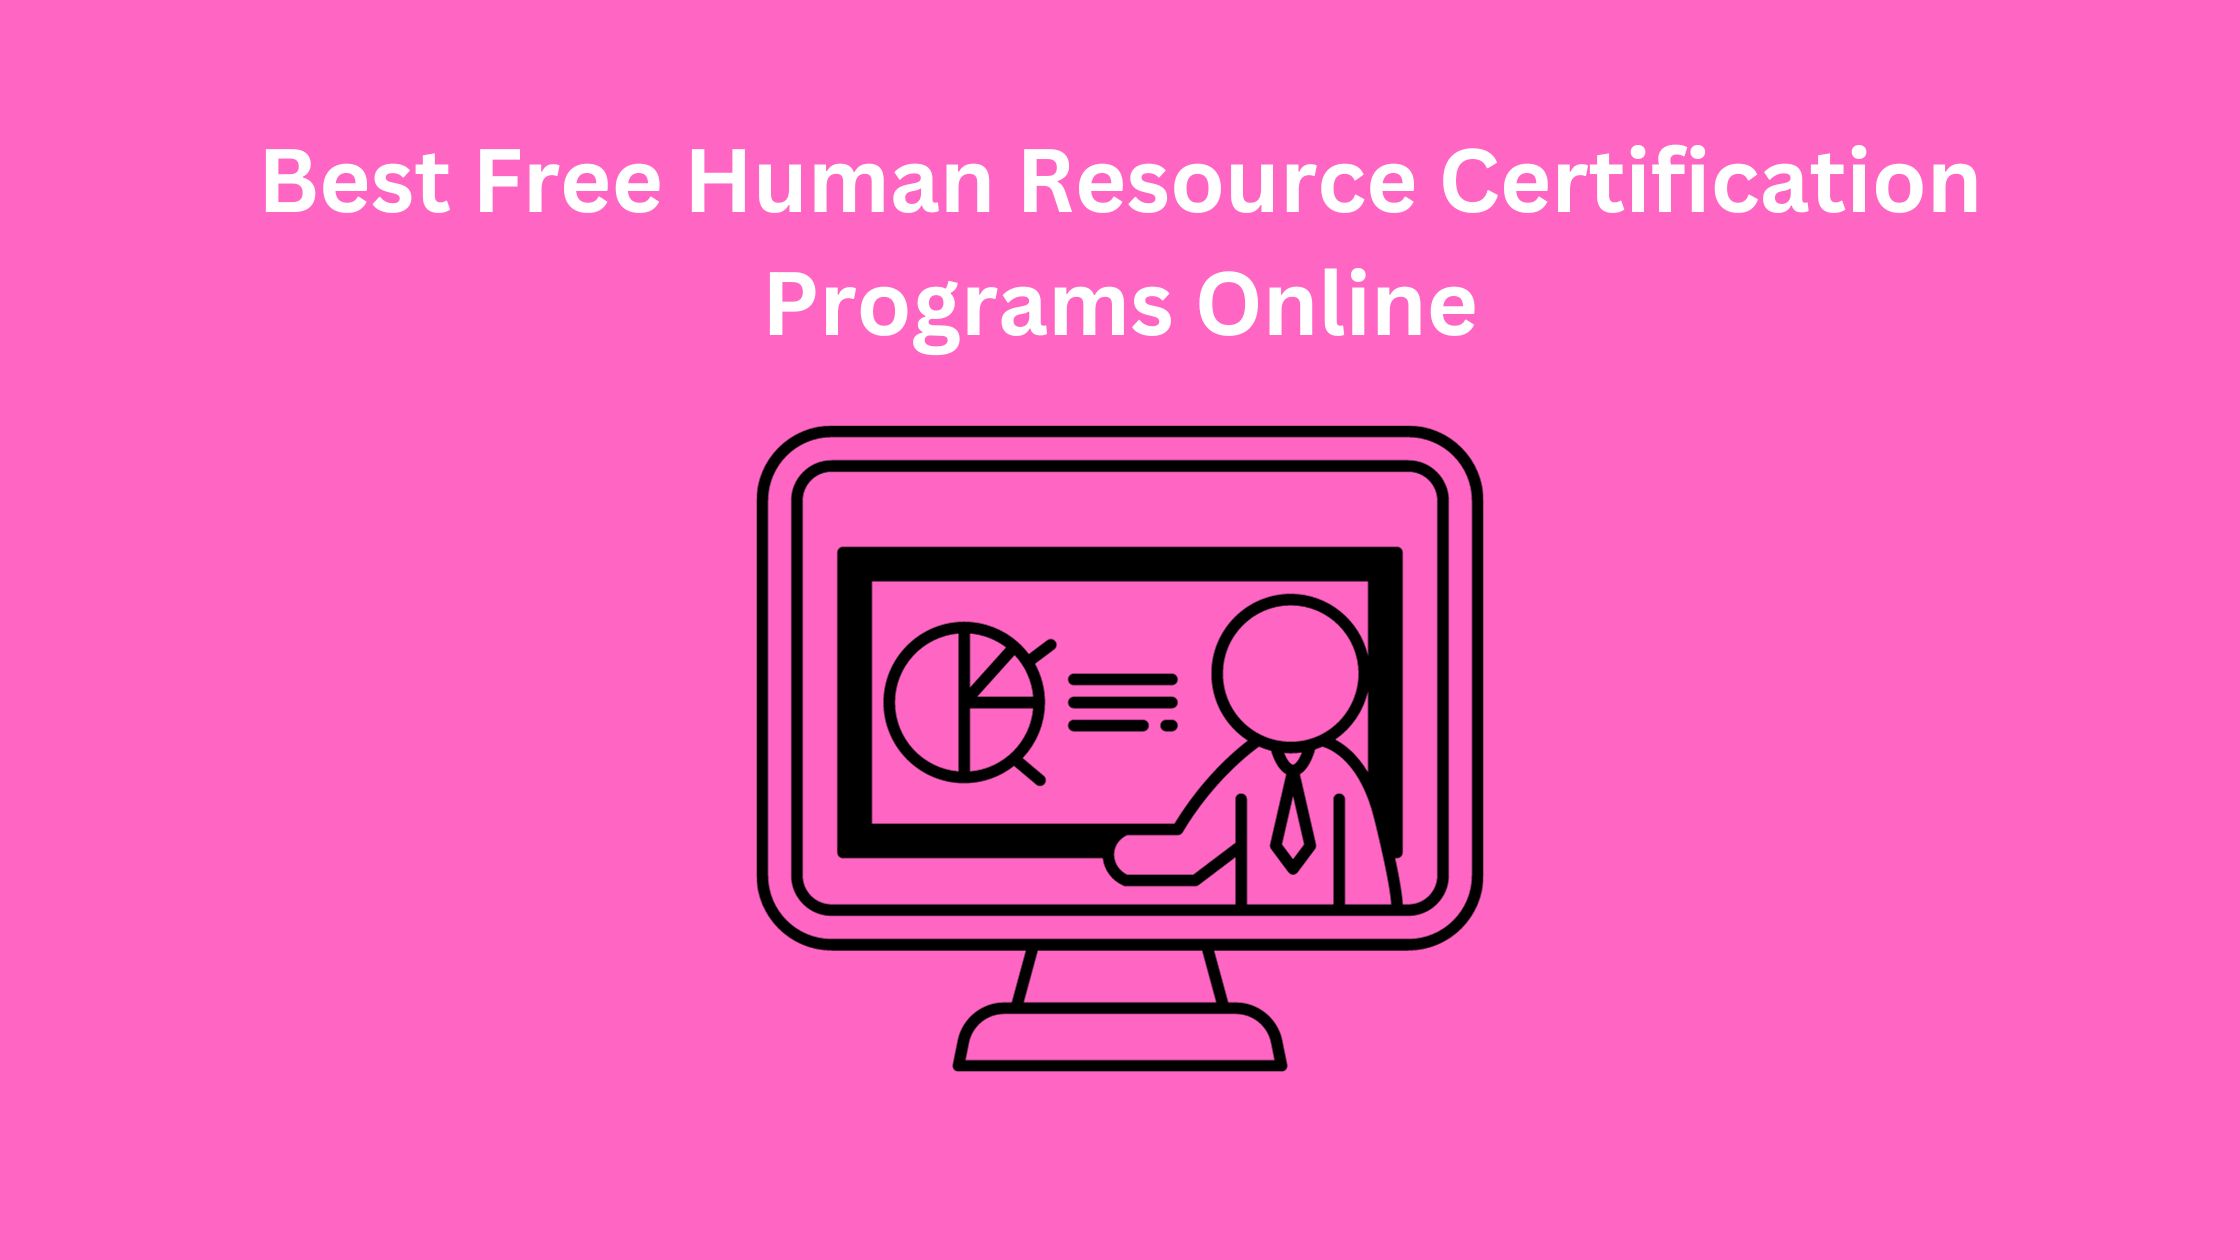 Best Free Human Resource Certification Programs Online